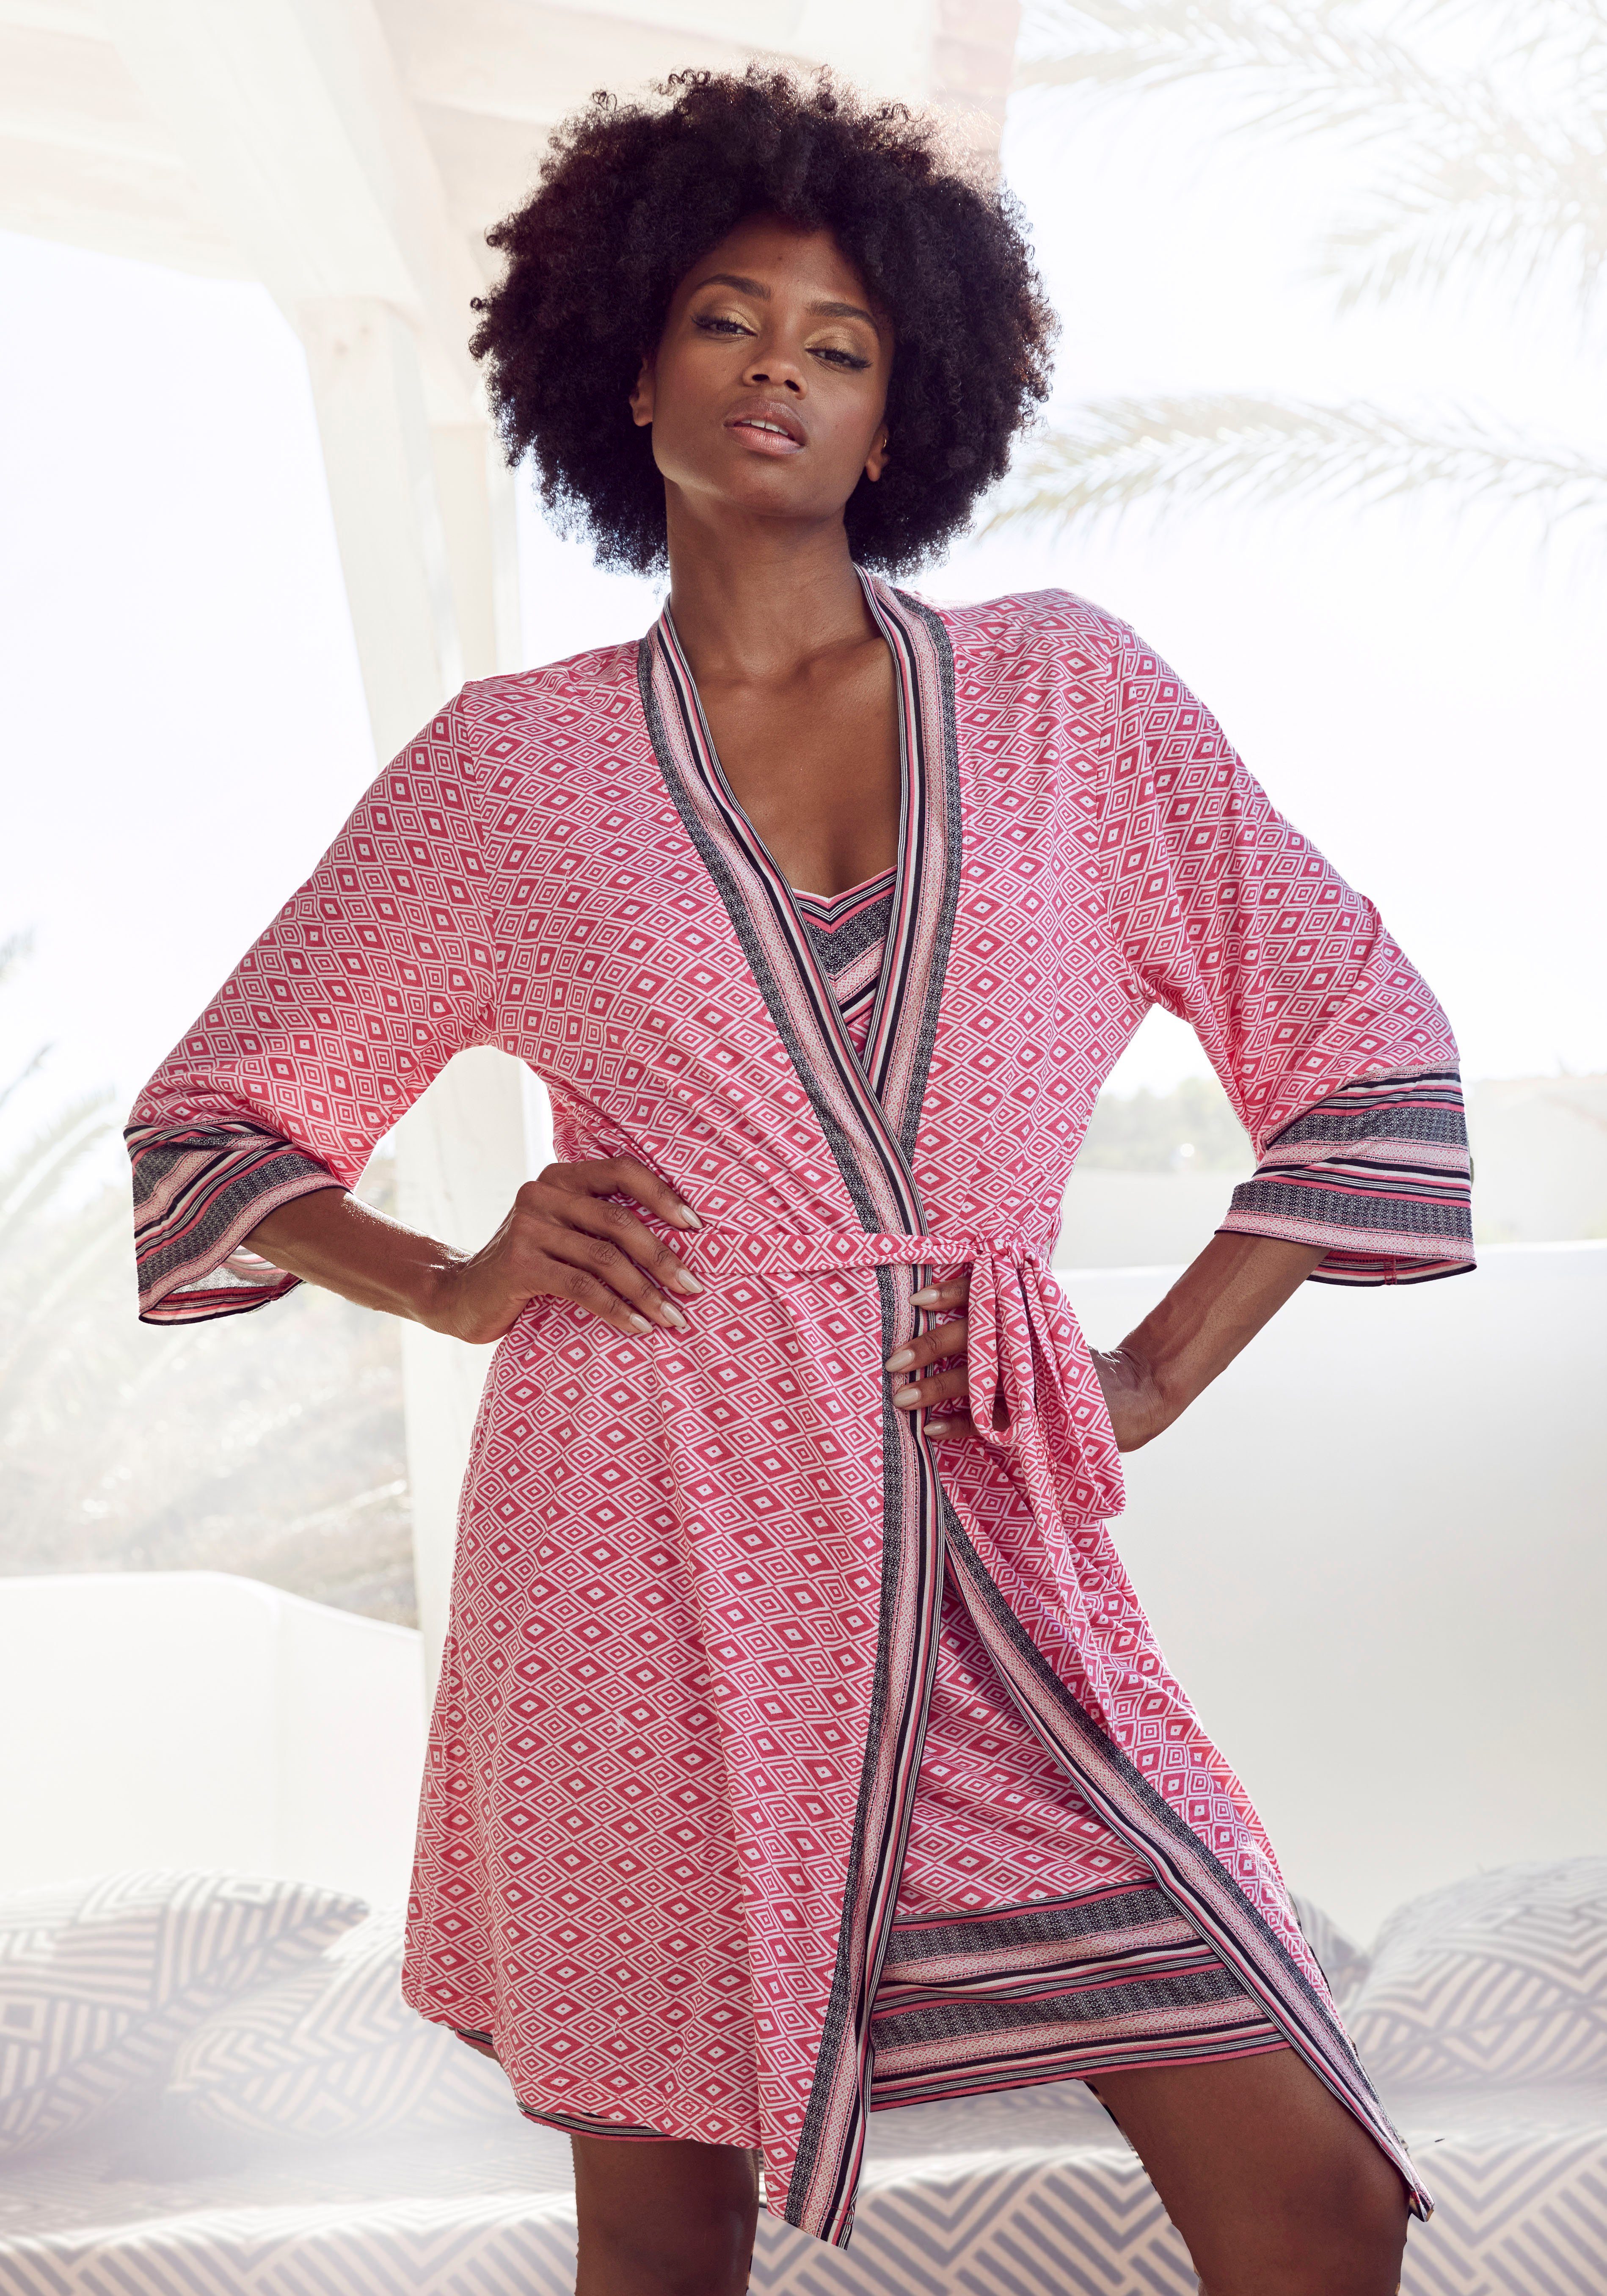 pink Dreams Kimono-Kragen, gemustert Kimono, in schönem Gürtel, Vivance Single-Jersey, Ethno-Design Kurzform,